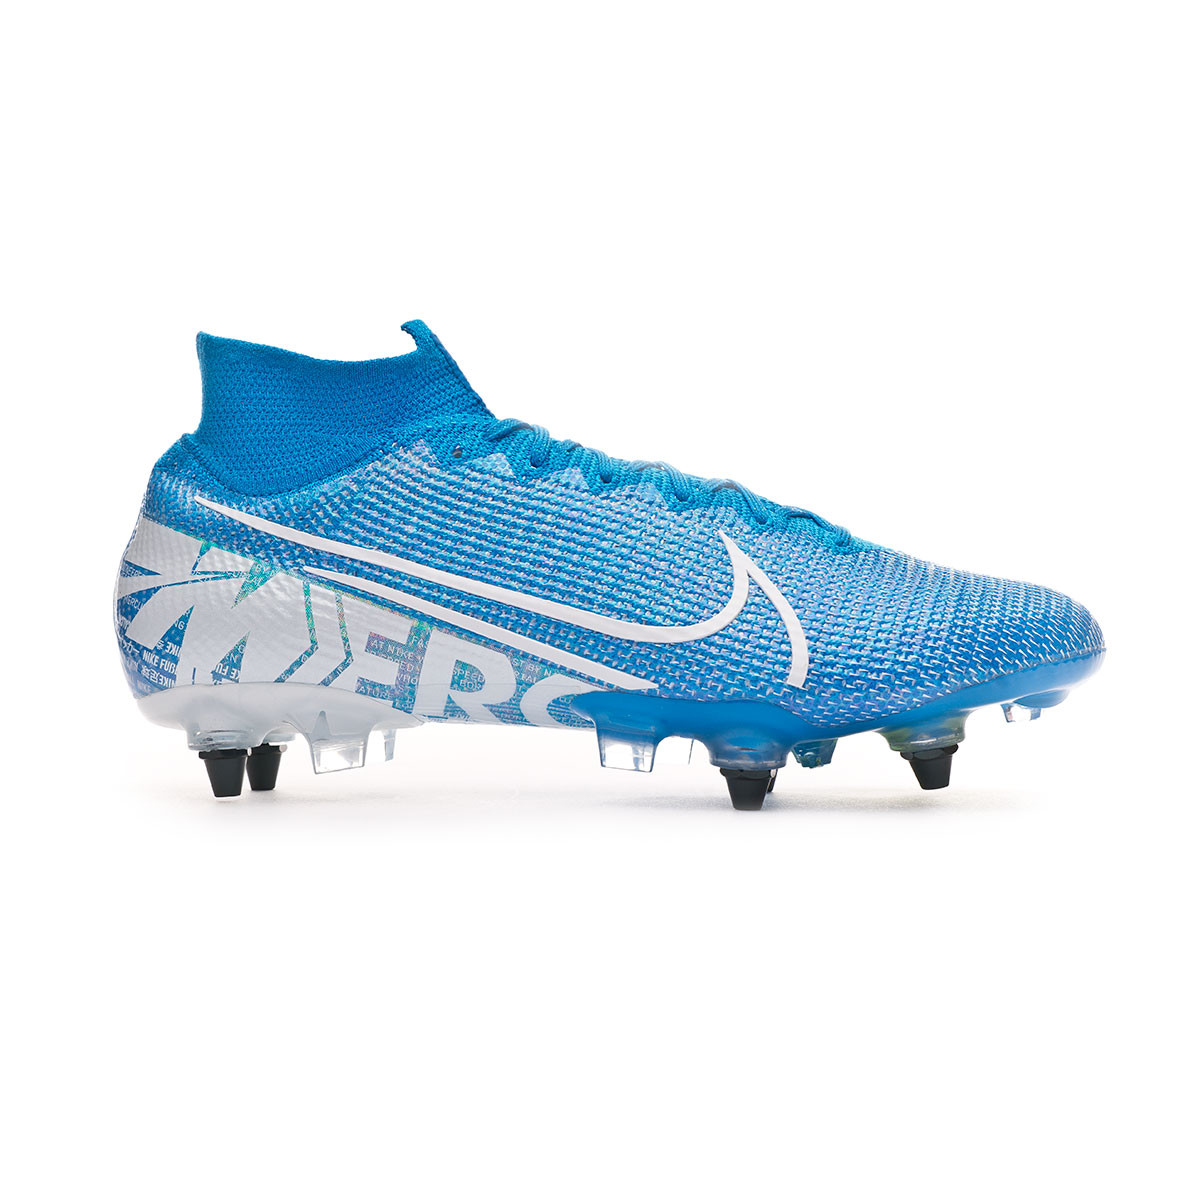 Nike Football Shoes Mercurial Superfly 7 Elite Fg Blue Hero.